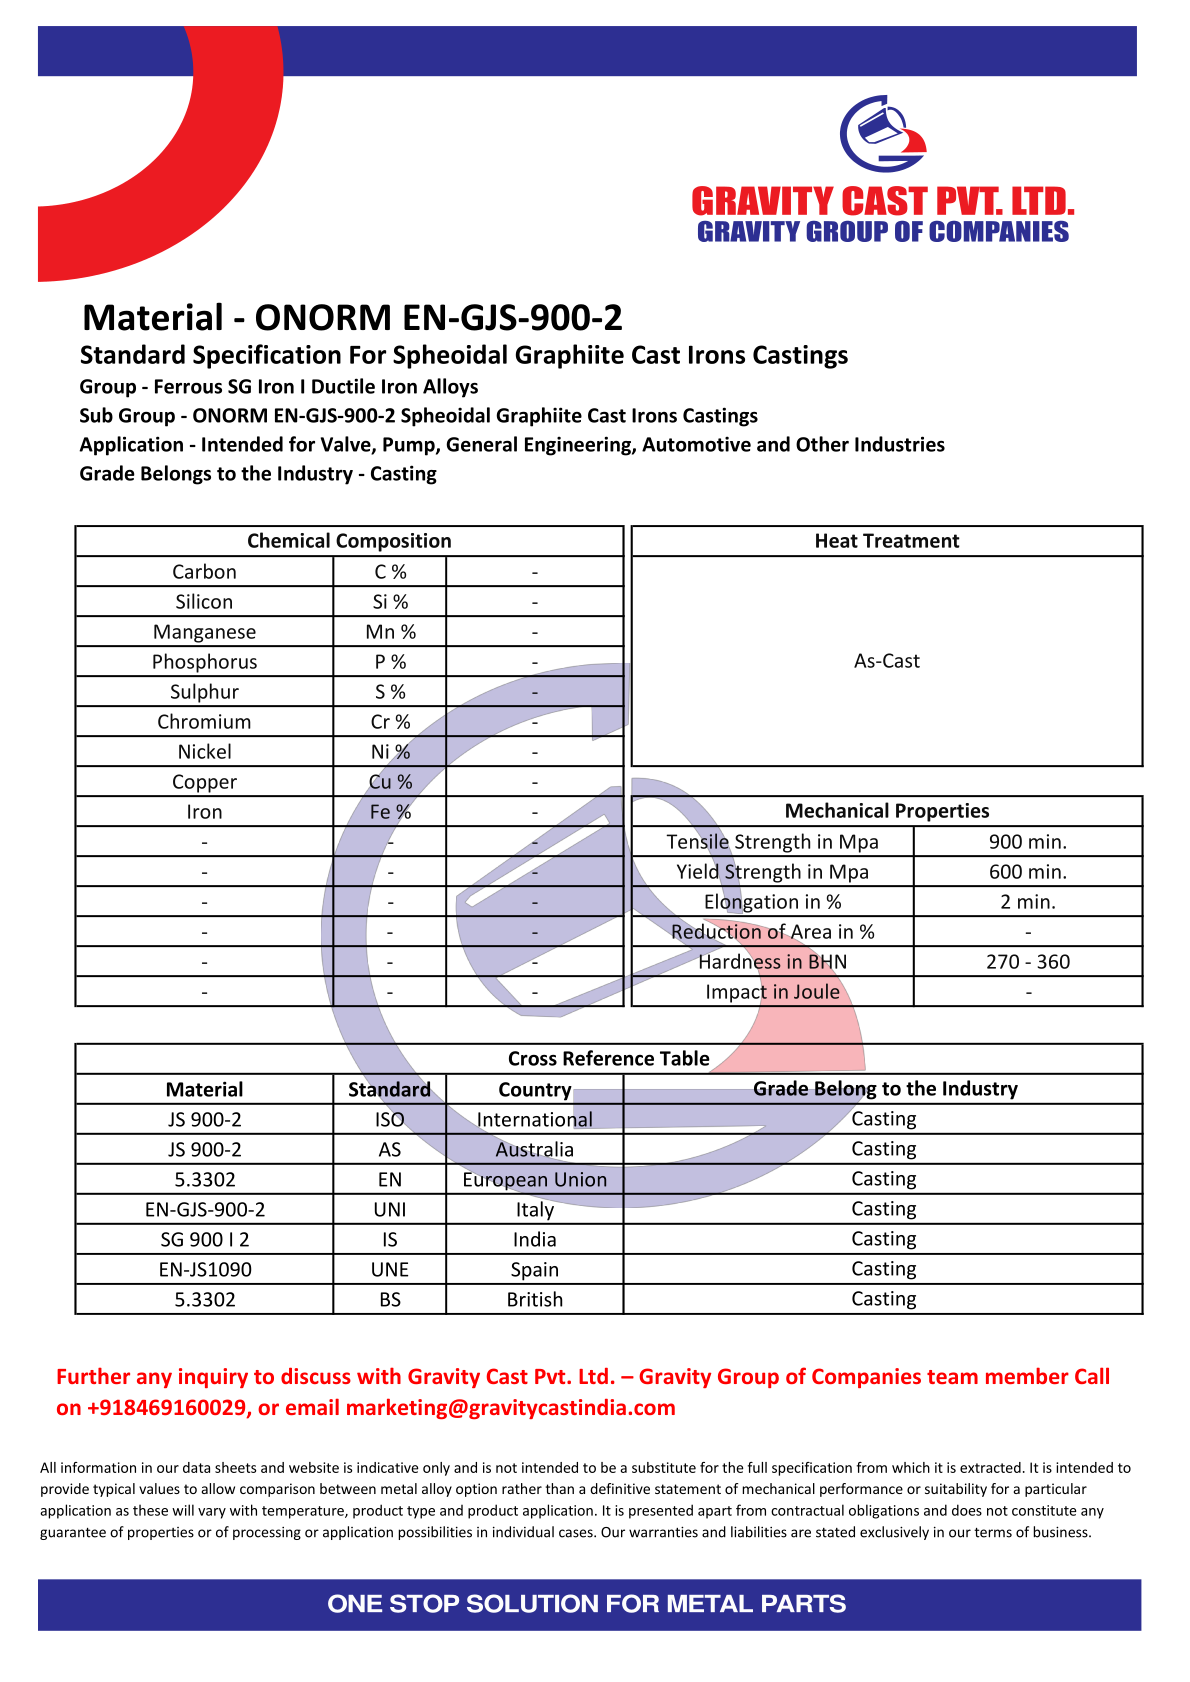 ONORM EN-GJS-900-2.pdf